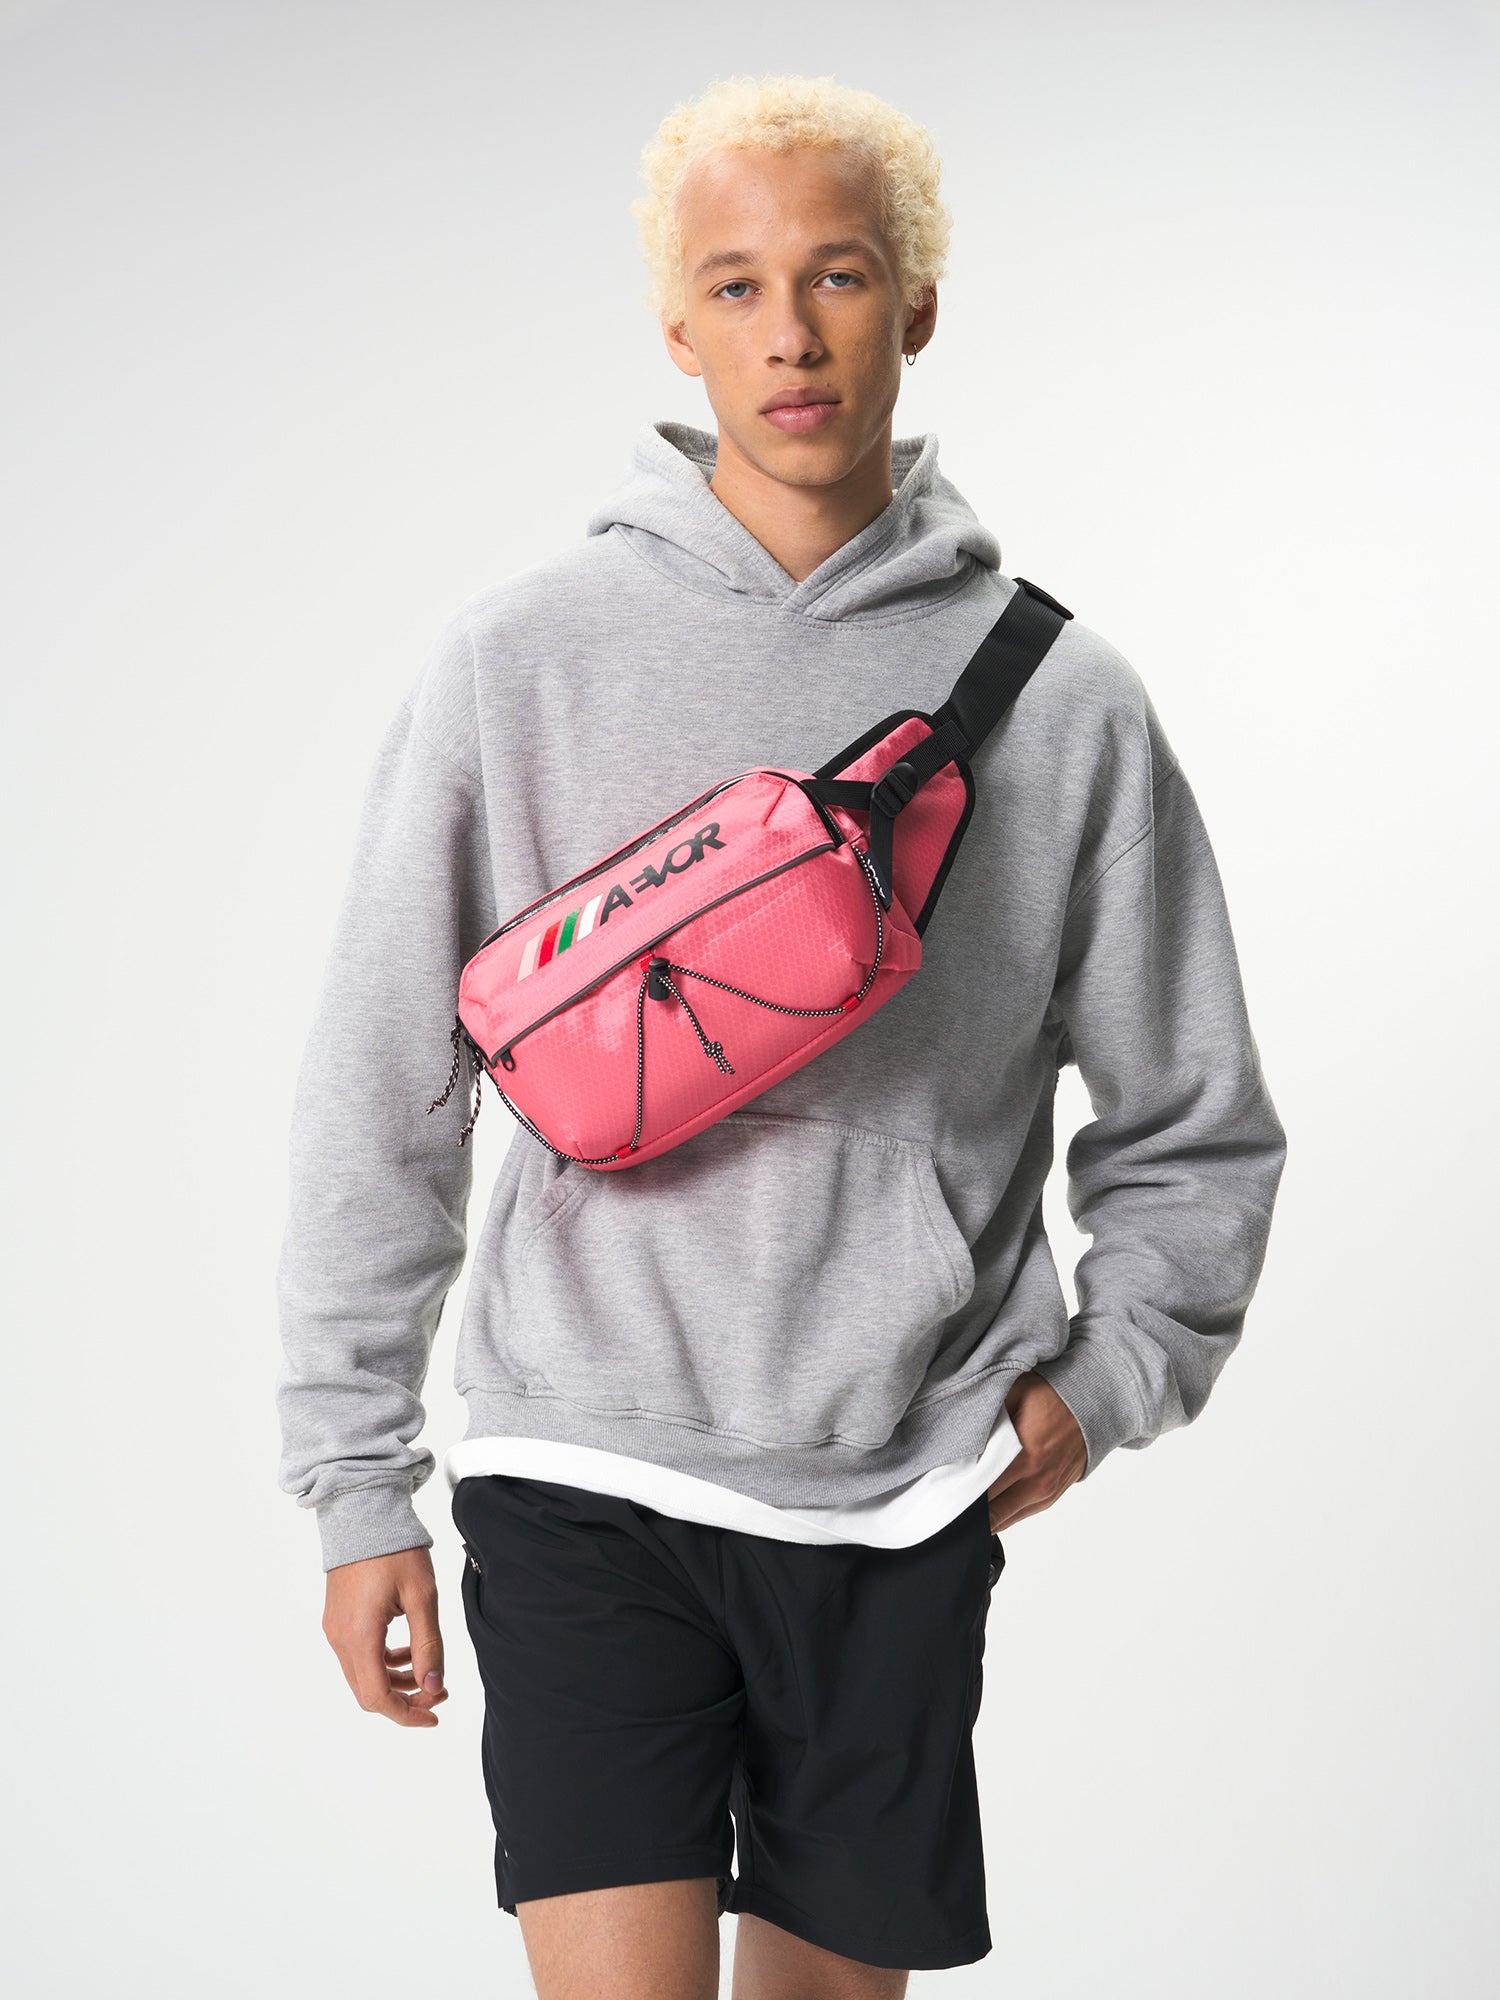 AEVOR Bar Bag handlebar bag / GIRO SPECIAL MODEL - Proof Pink Flash